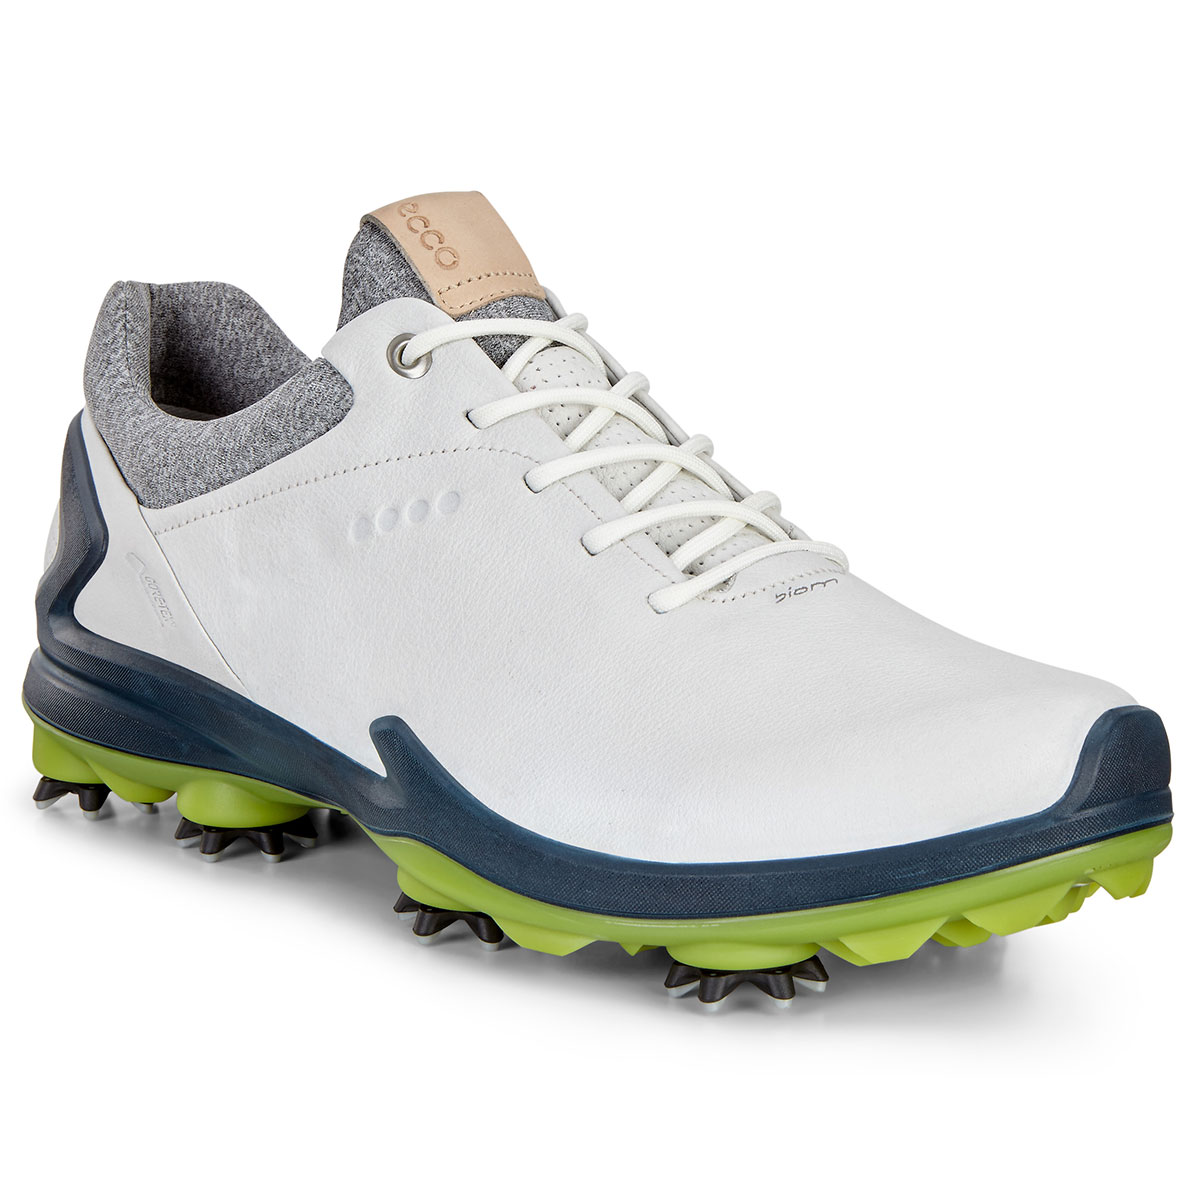 ECCO Golf Biom G3 Shoes from american golf